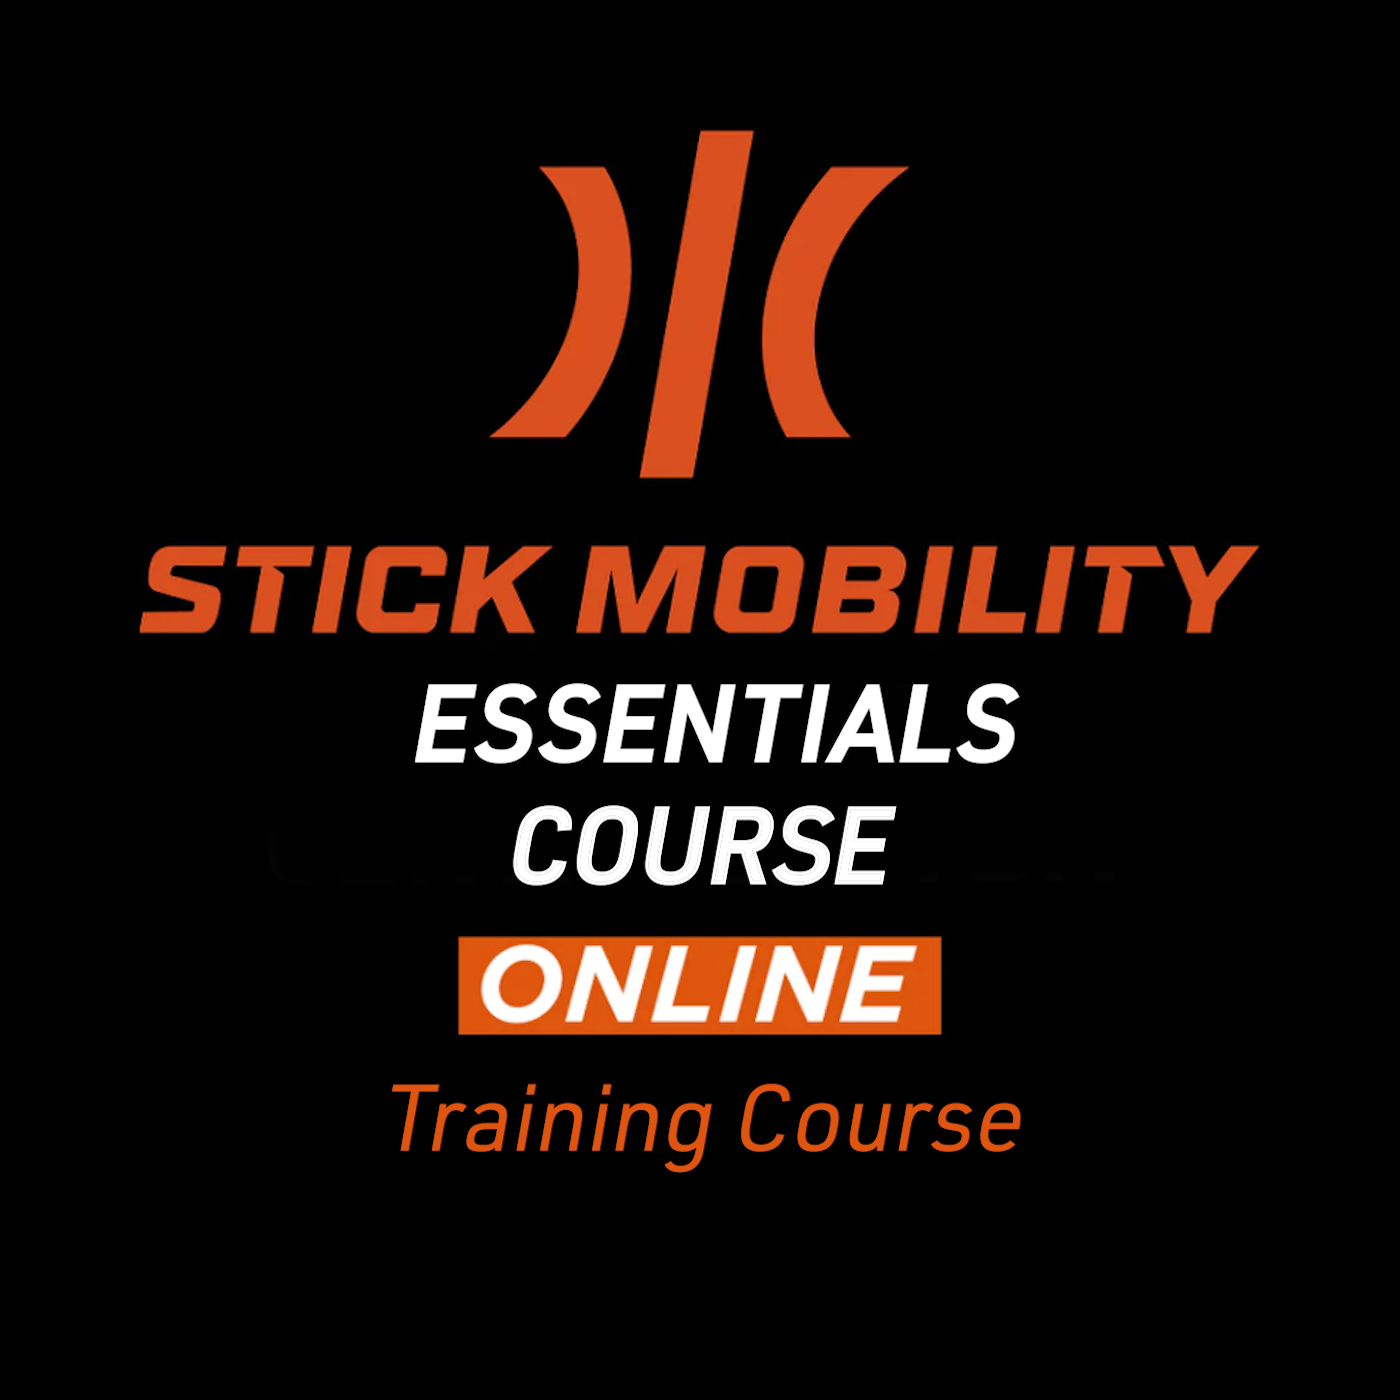 Stick Mobility Essentials Course Online